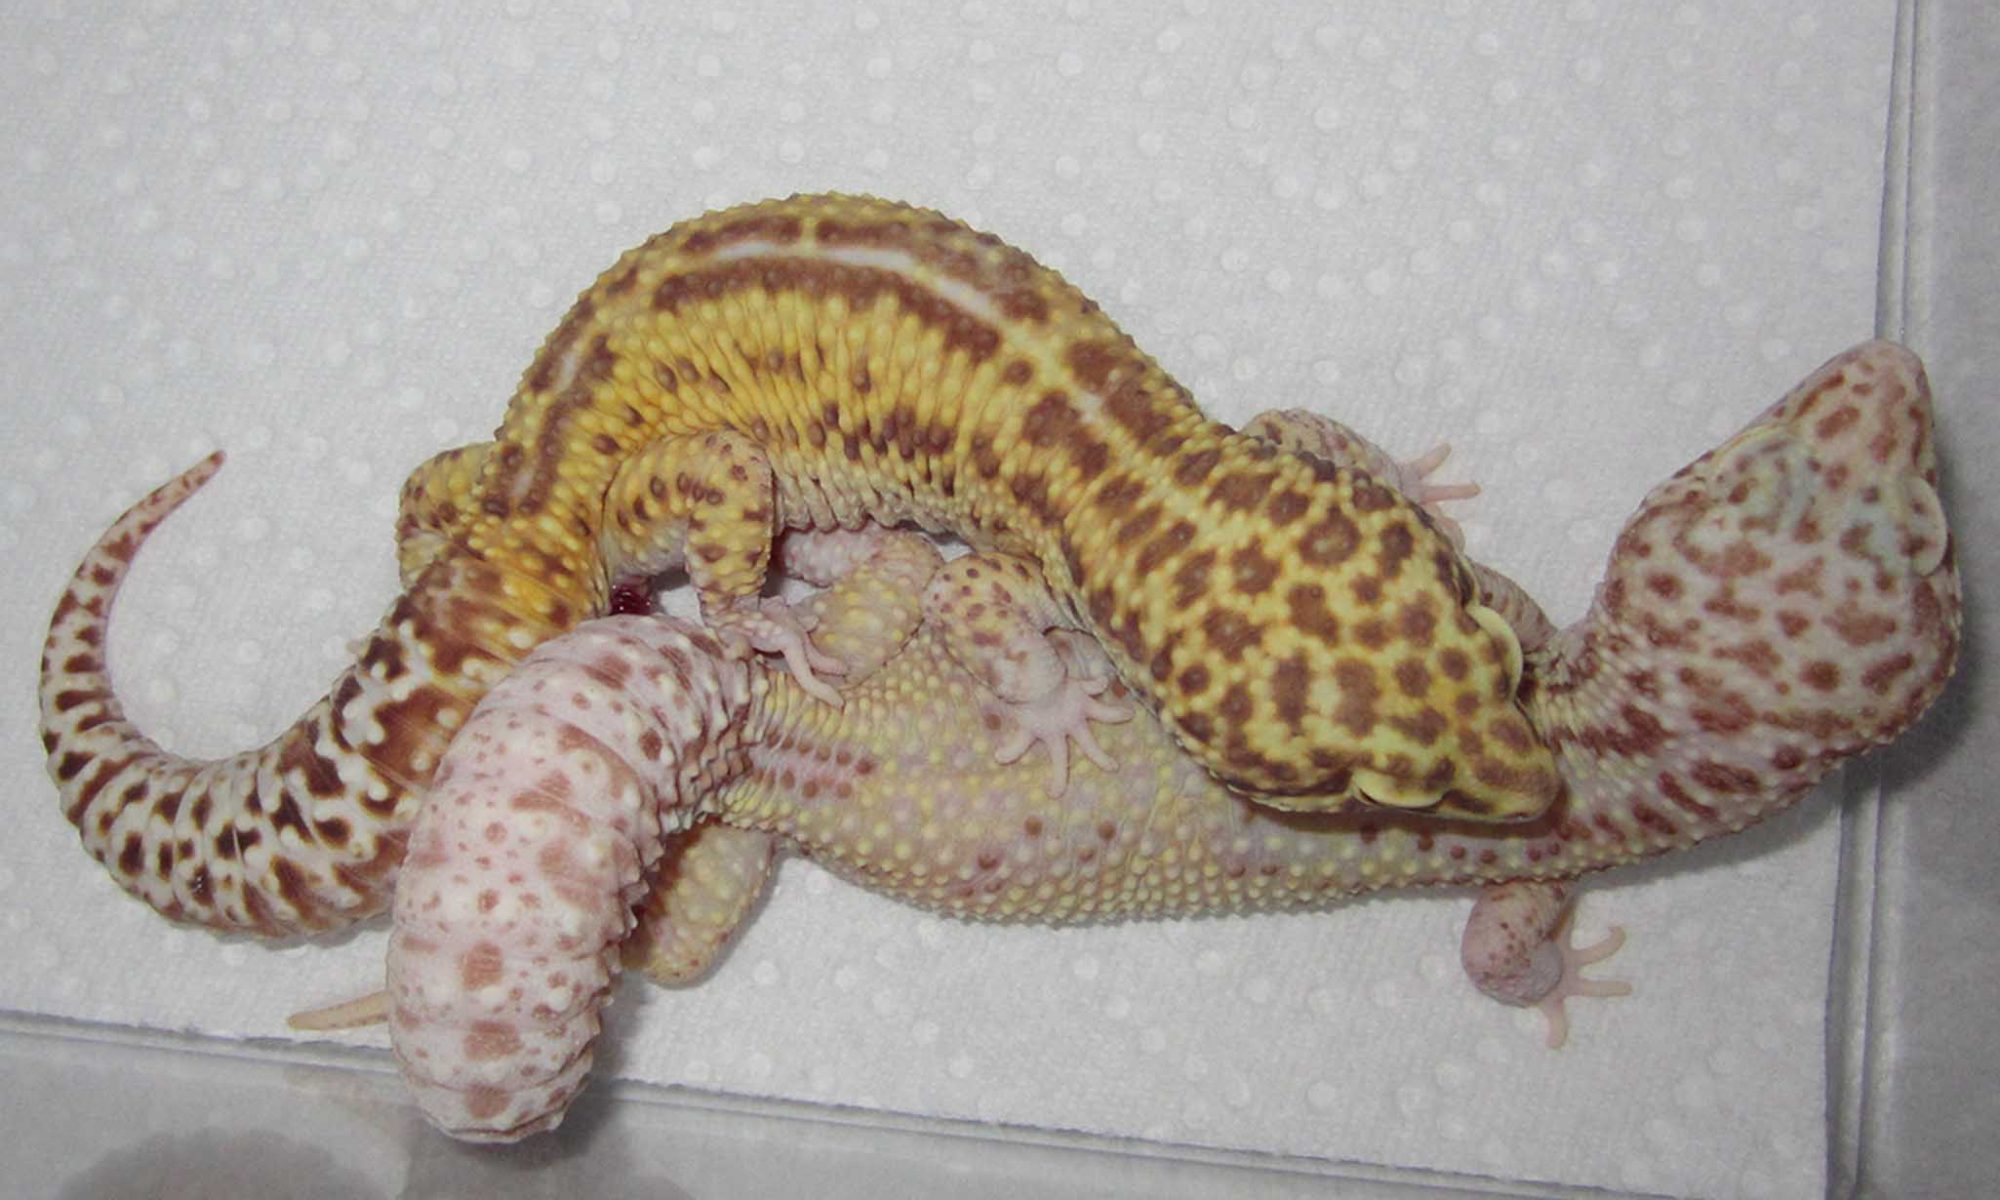 How Do Leopard Geckos Breed